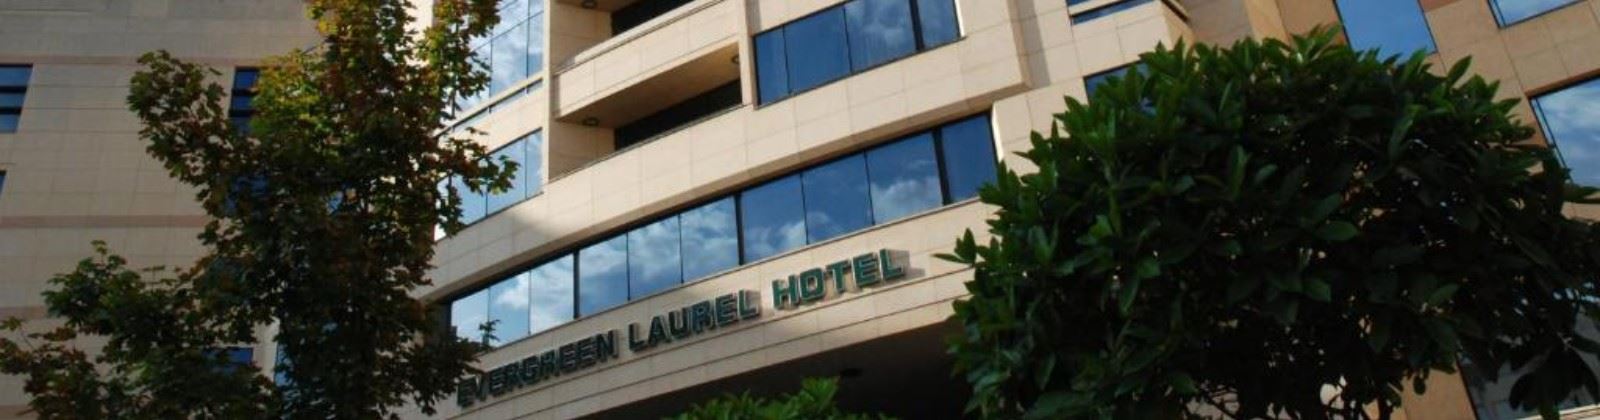 evergreen laurel hotel olevene restaurant seminaire booking 